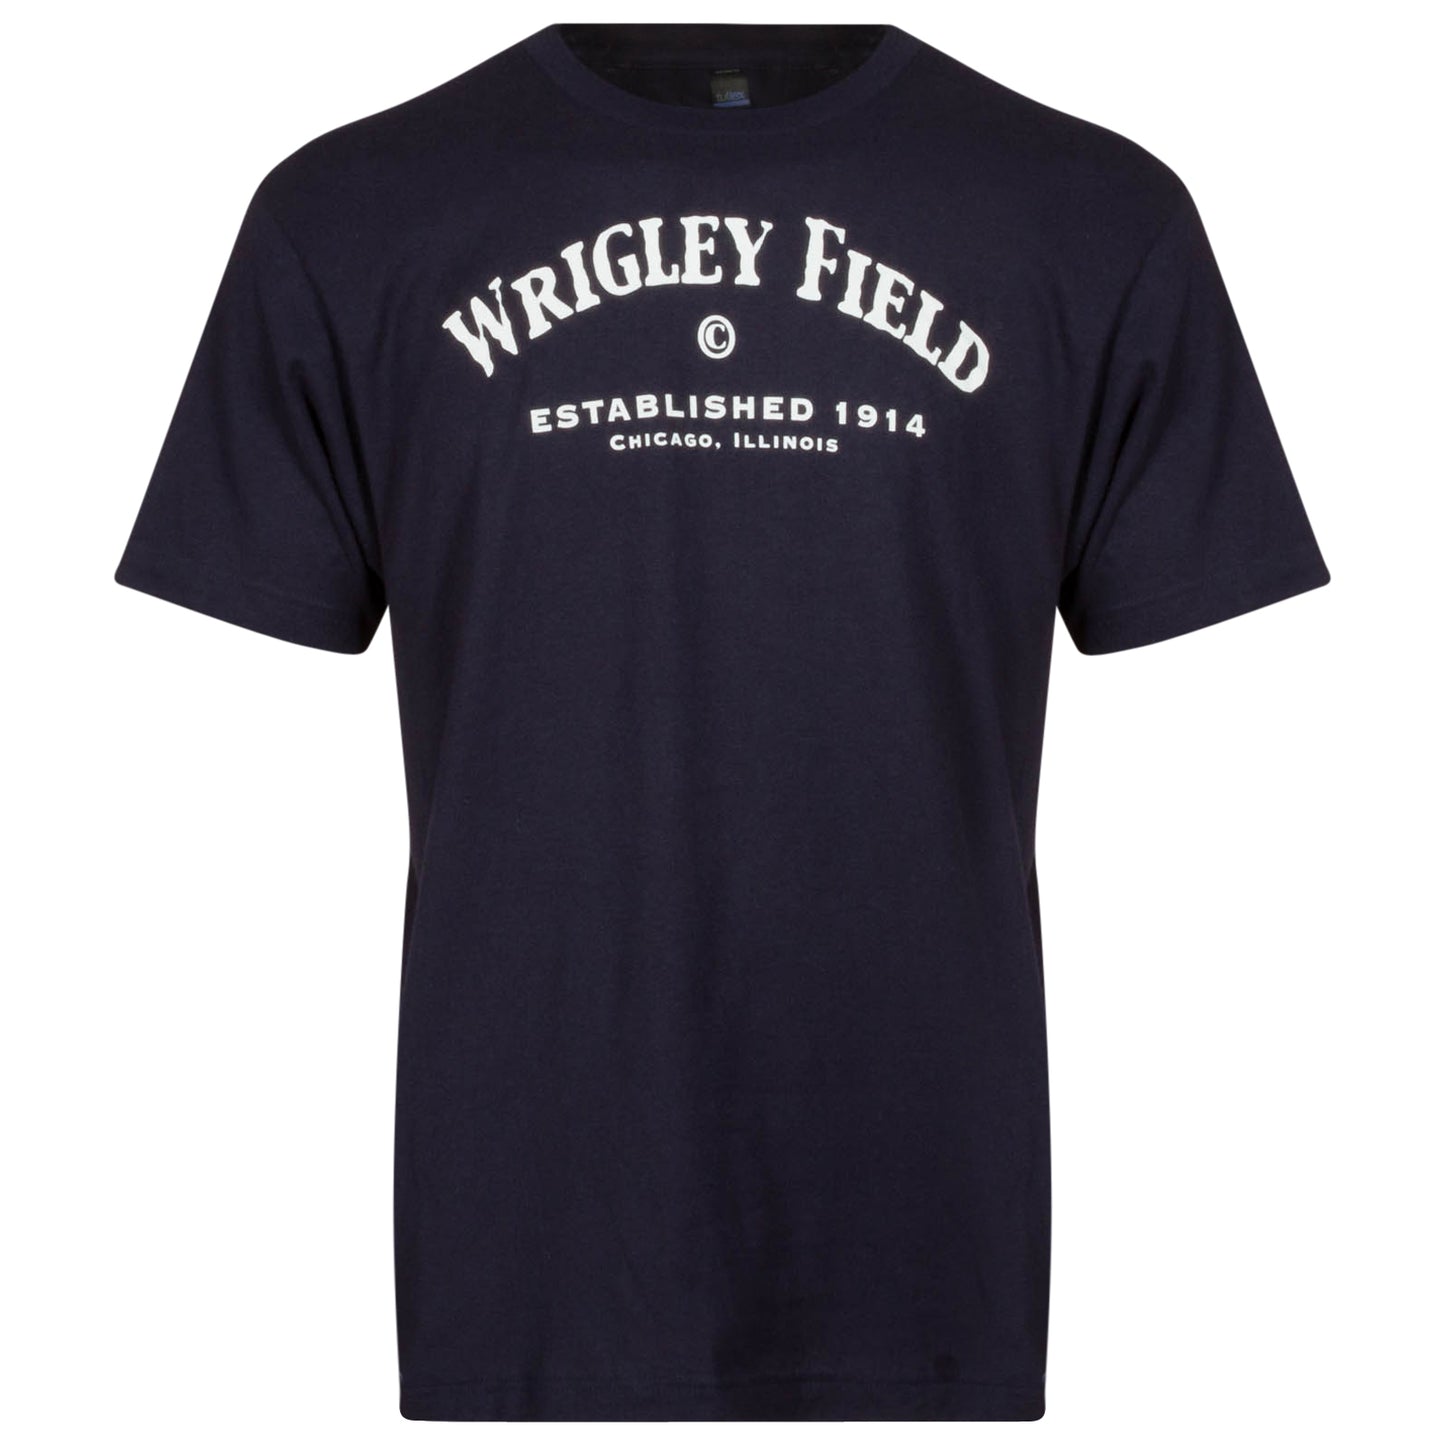 Wrigley Field Chicago Established 1914 Fancy Mens T-Shirt